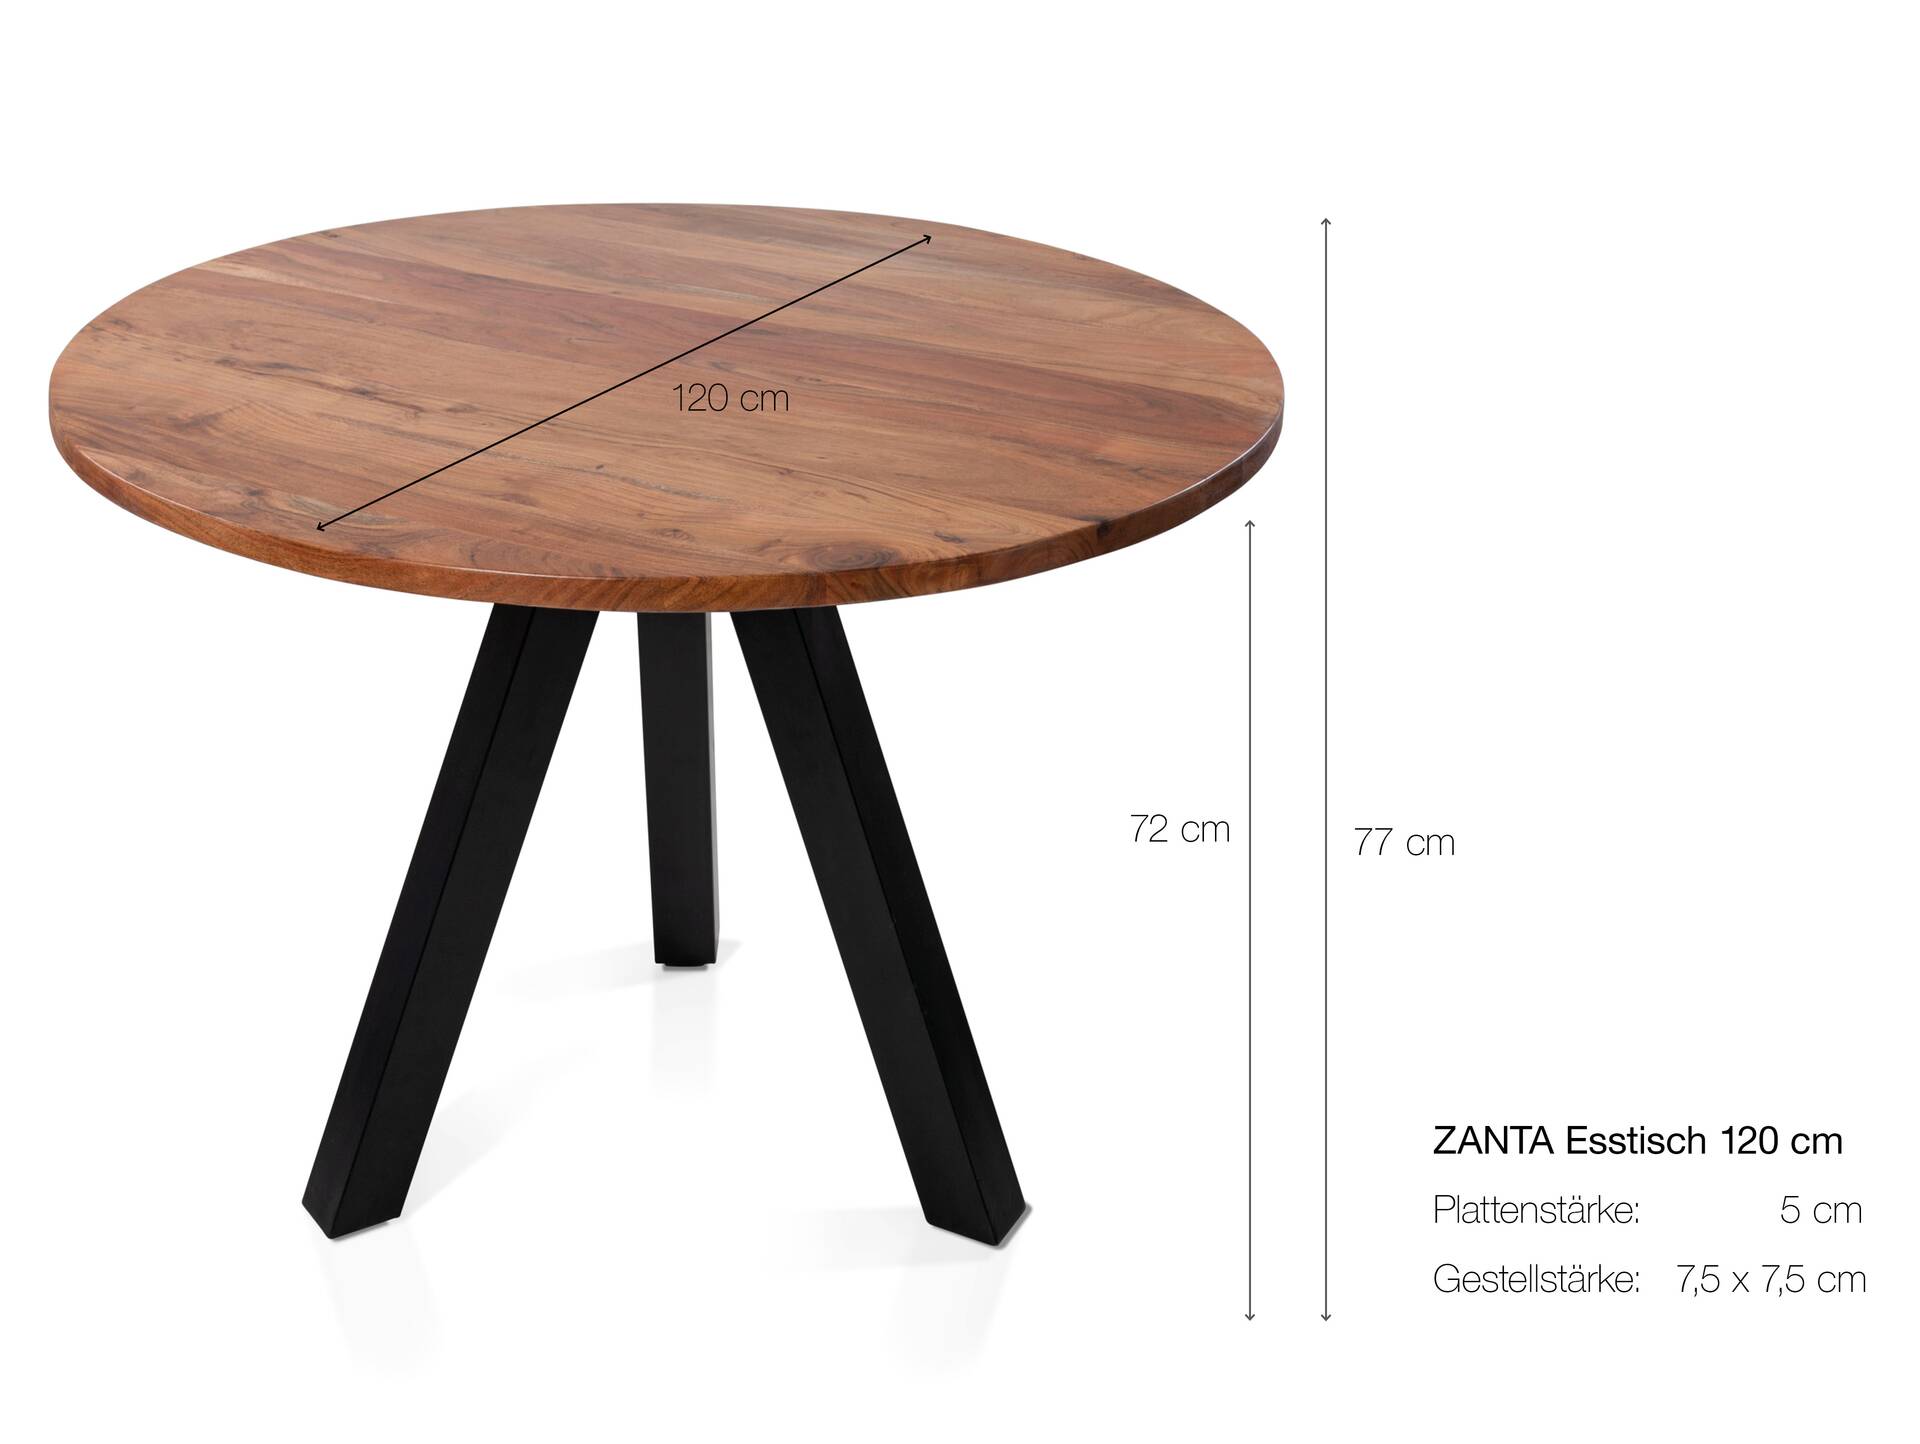 ZANTA Esstisch, Platte: 5 cm, Material Massivholz, Akazienholz 120 cm